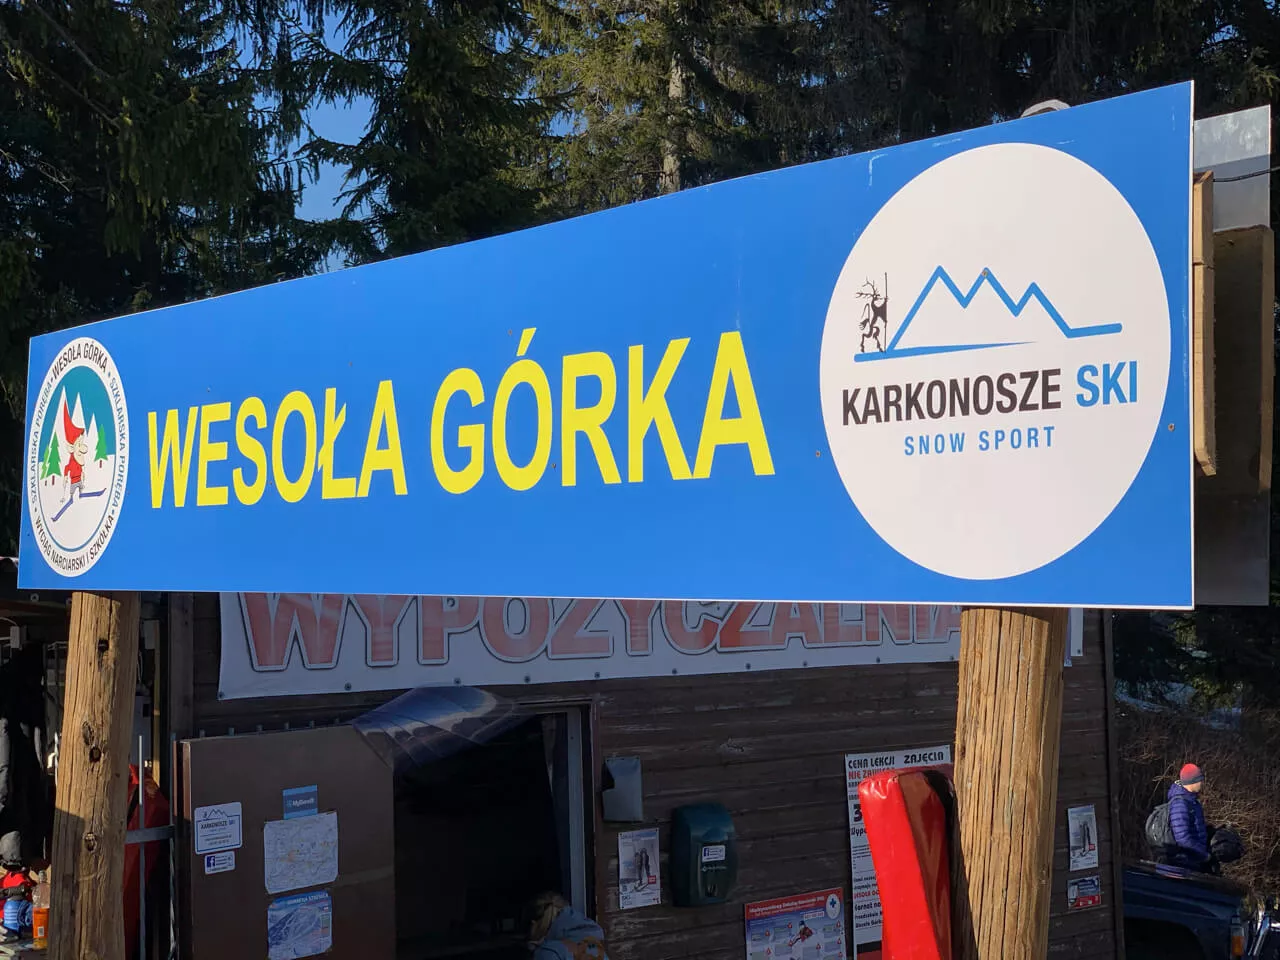 Ski School Wesola Gorka in Poland, Europe | Snowboarding,Skiing - Rated 0.9